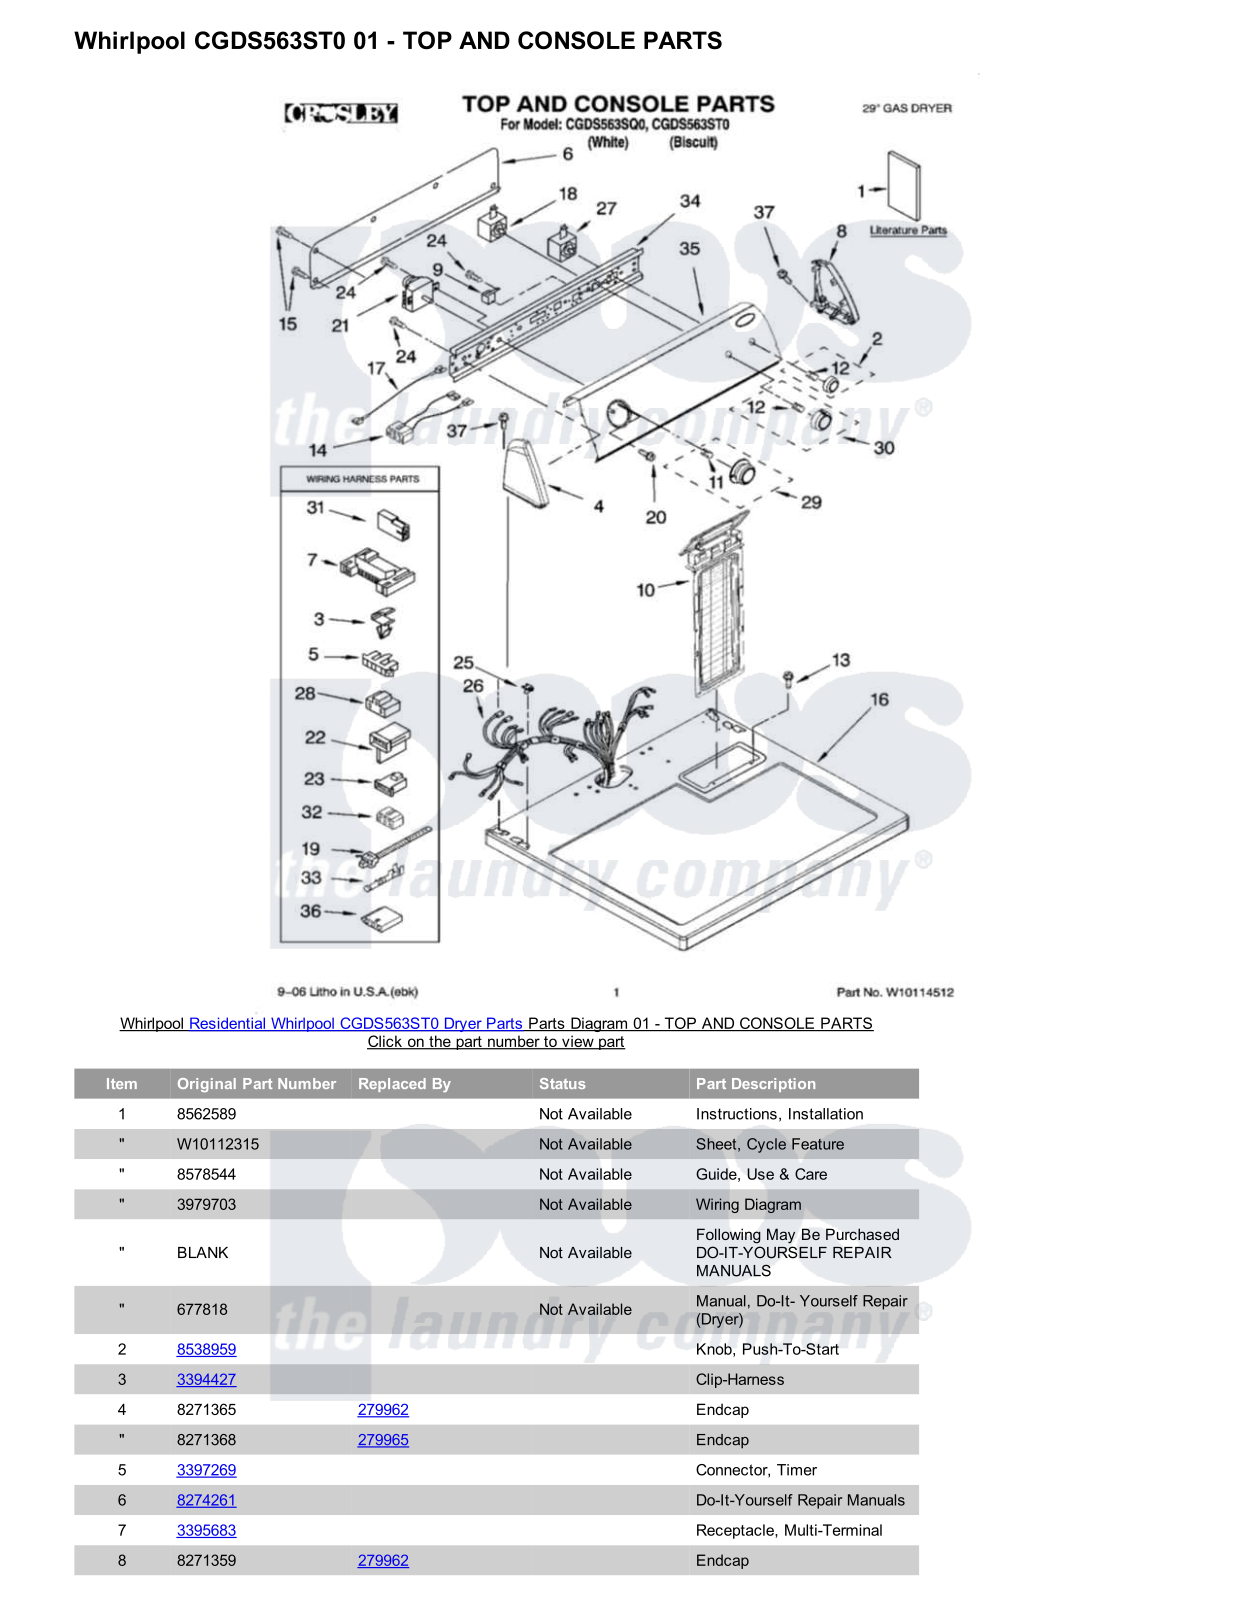 Whirlpool CGDS563ST0 Parts Diagram